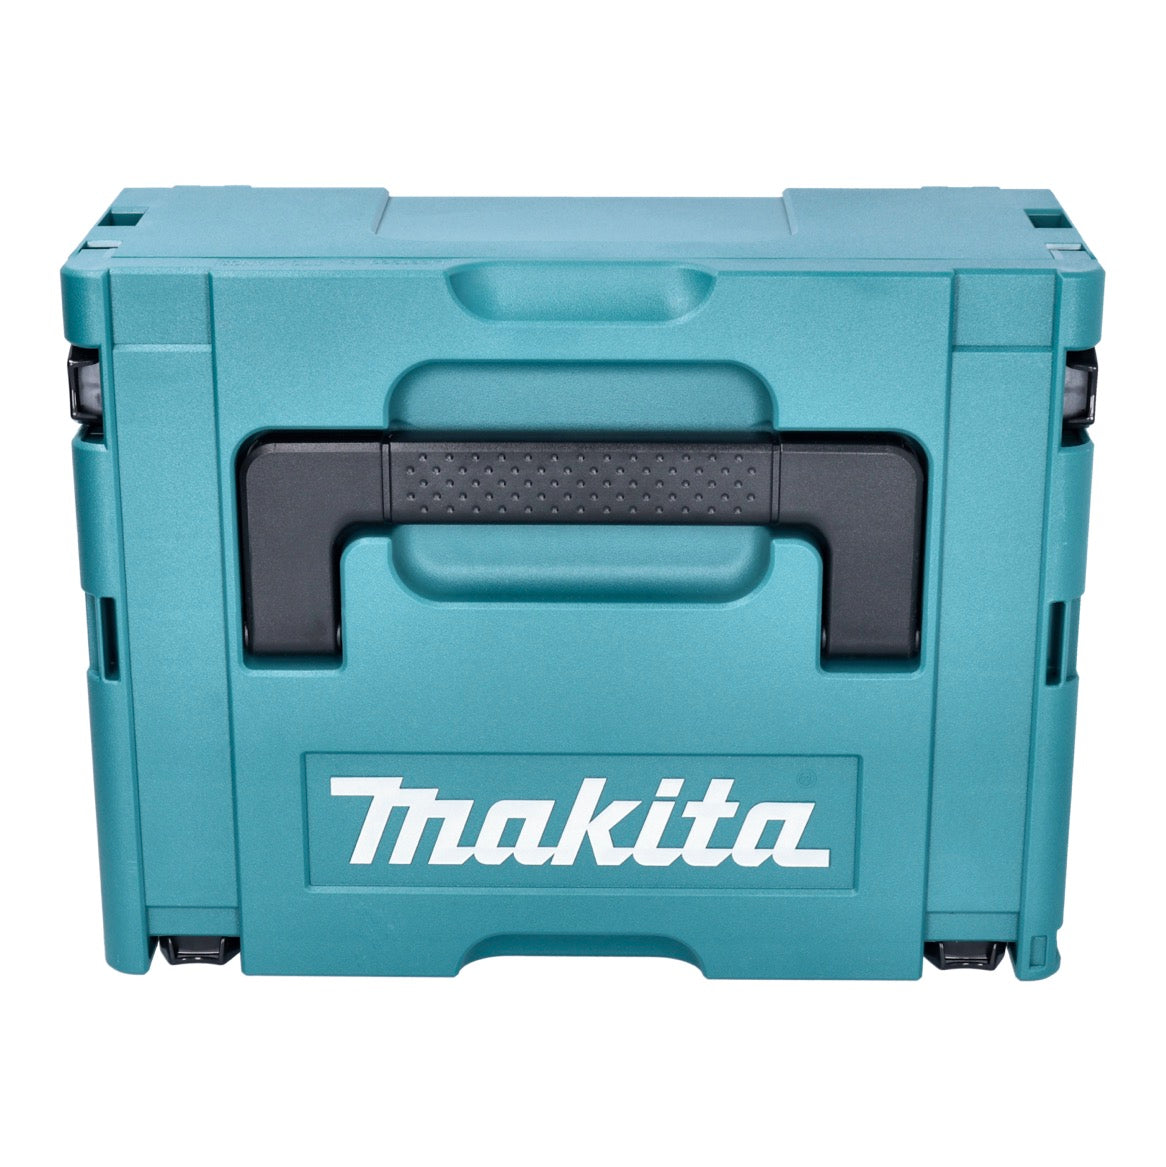 Makita BO 5031 J Exzenterschleifer Schleifmaschine 300 Watt 125 mm + Makpac - Toolbrothers